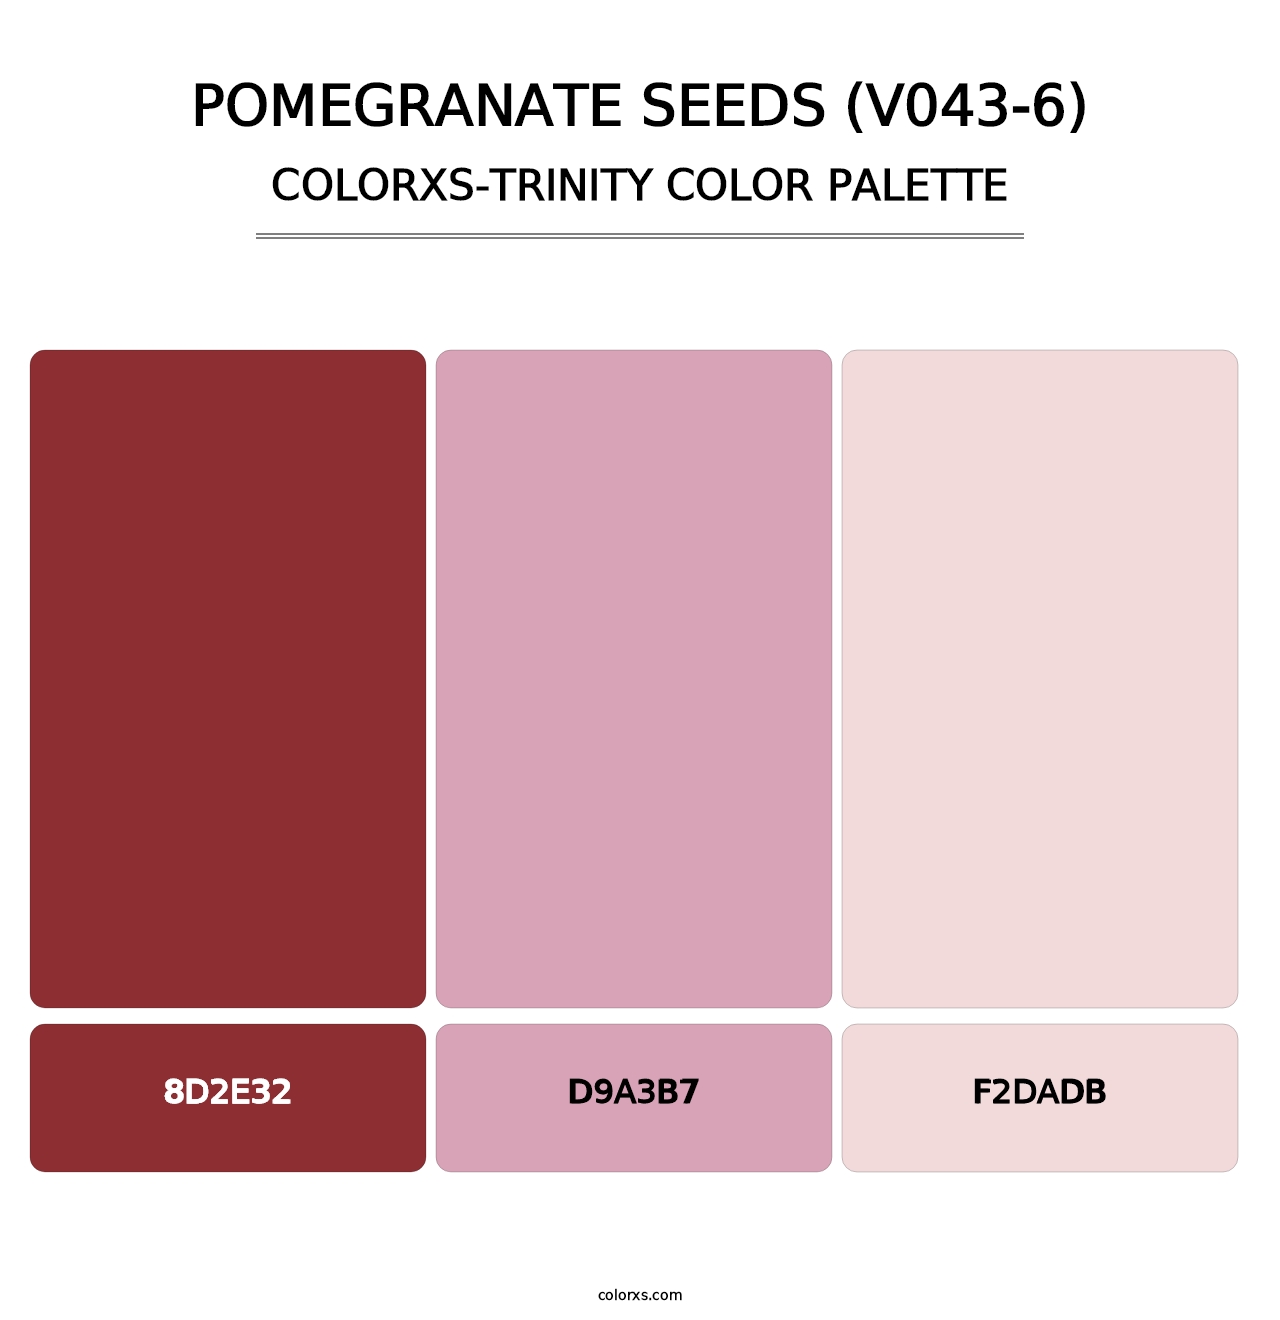 Pomegranate Seeds (V043-6) - Colorxs Trinity Palette